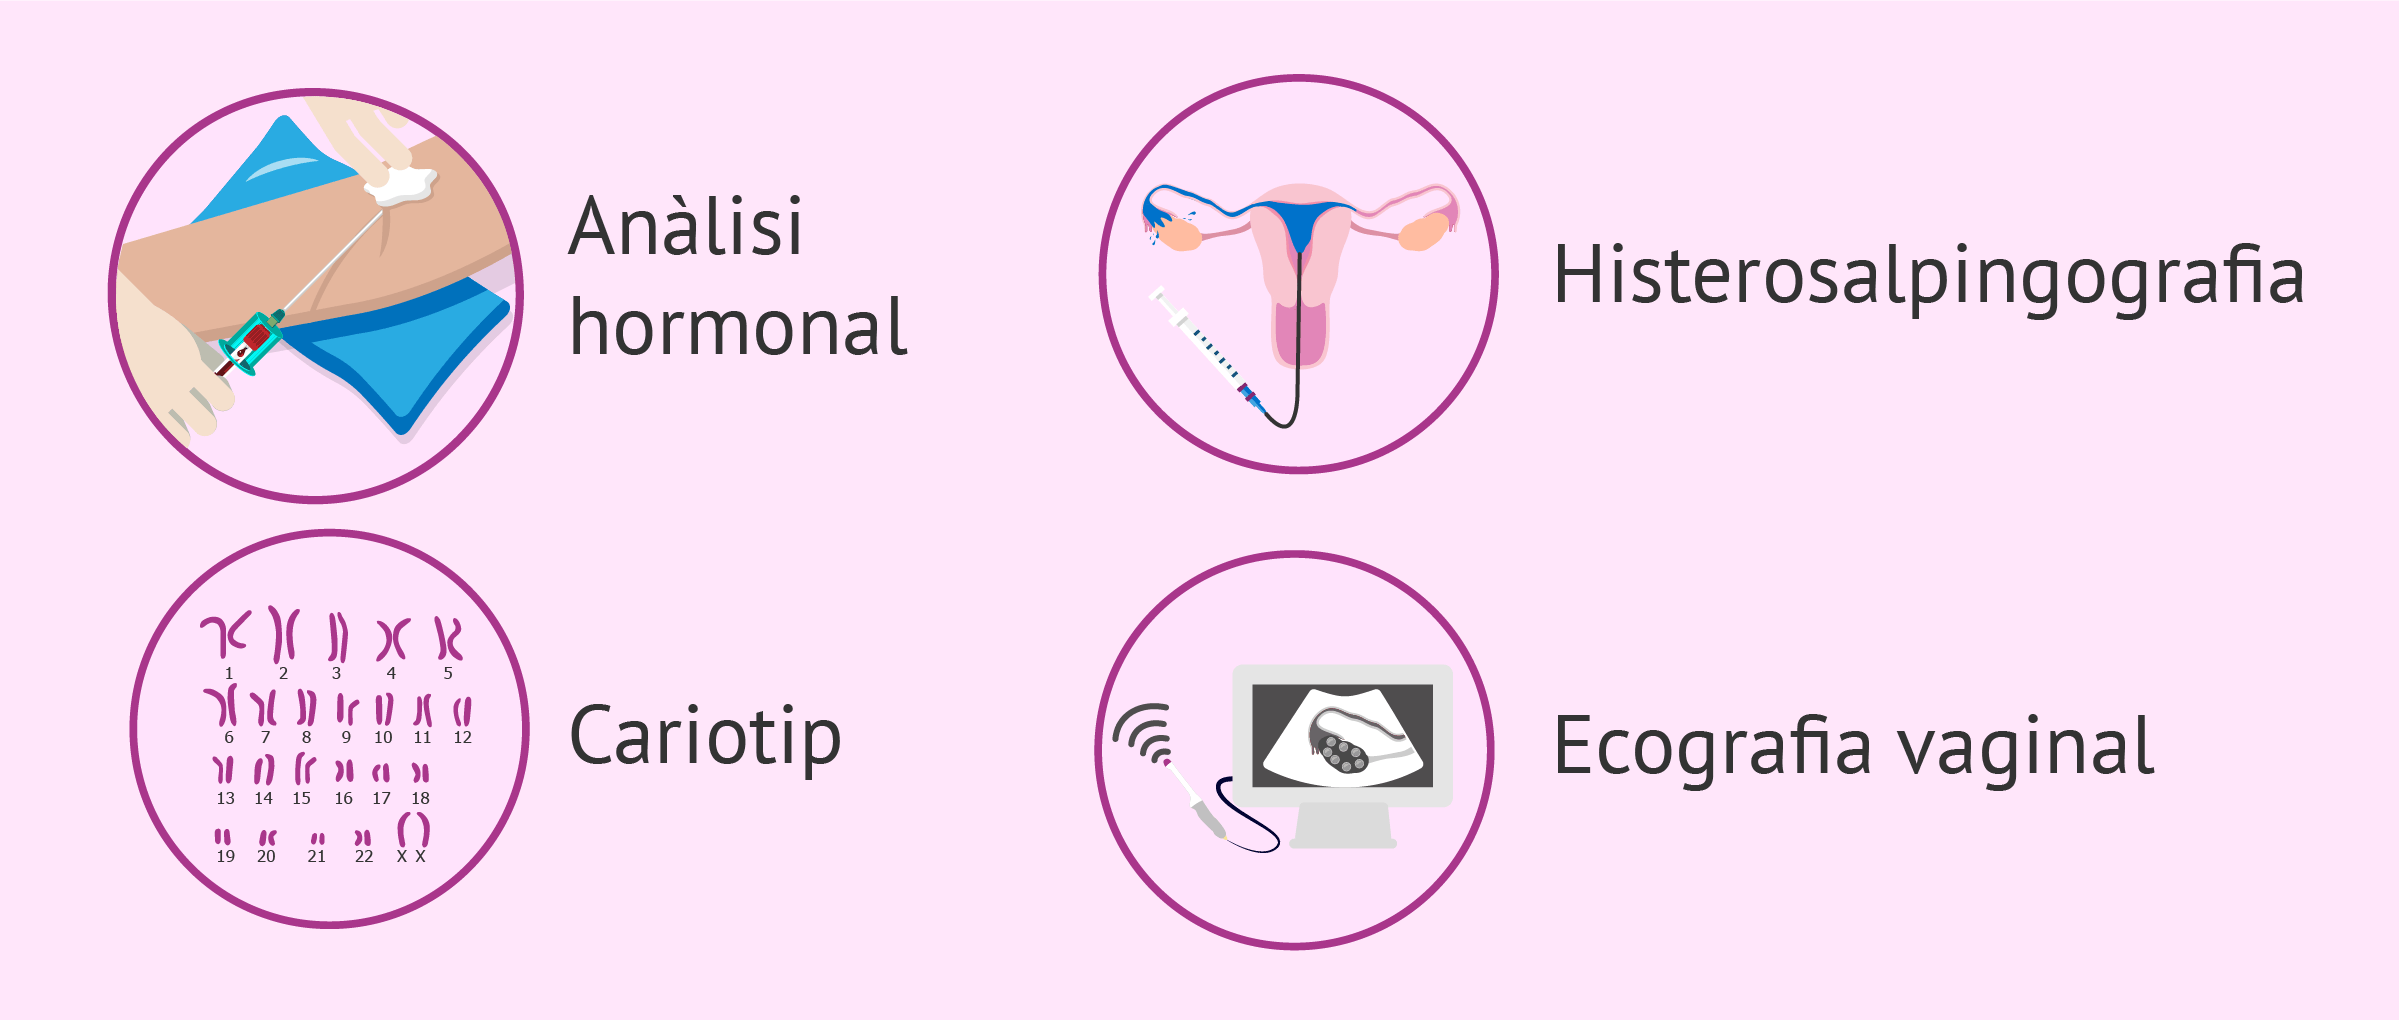 Estudis de fertilitat femenina